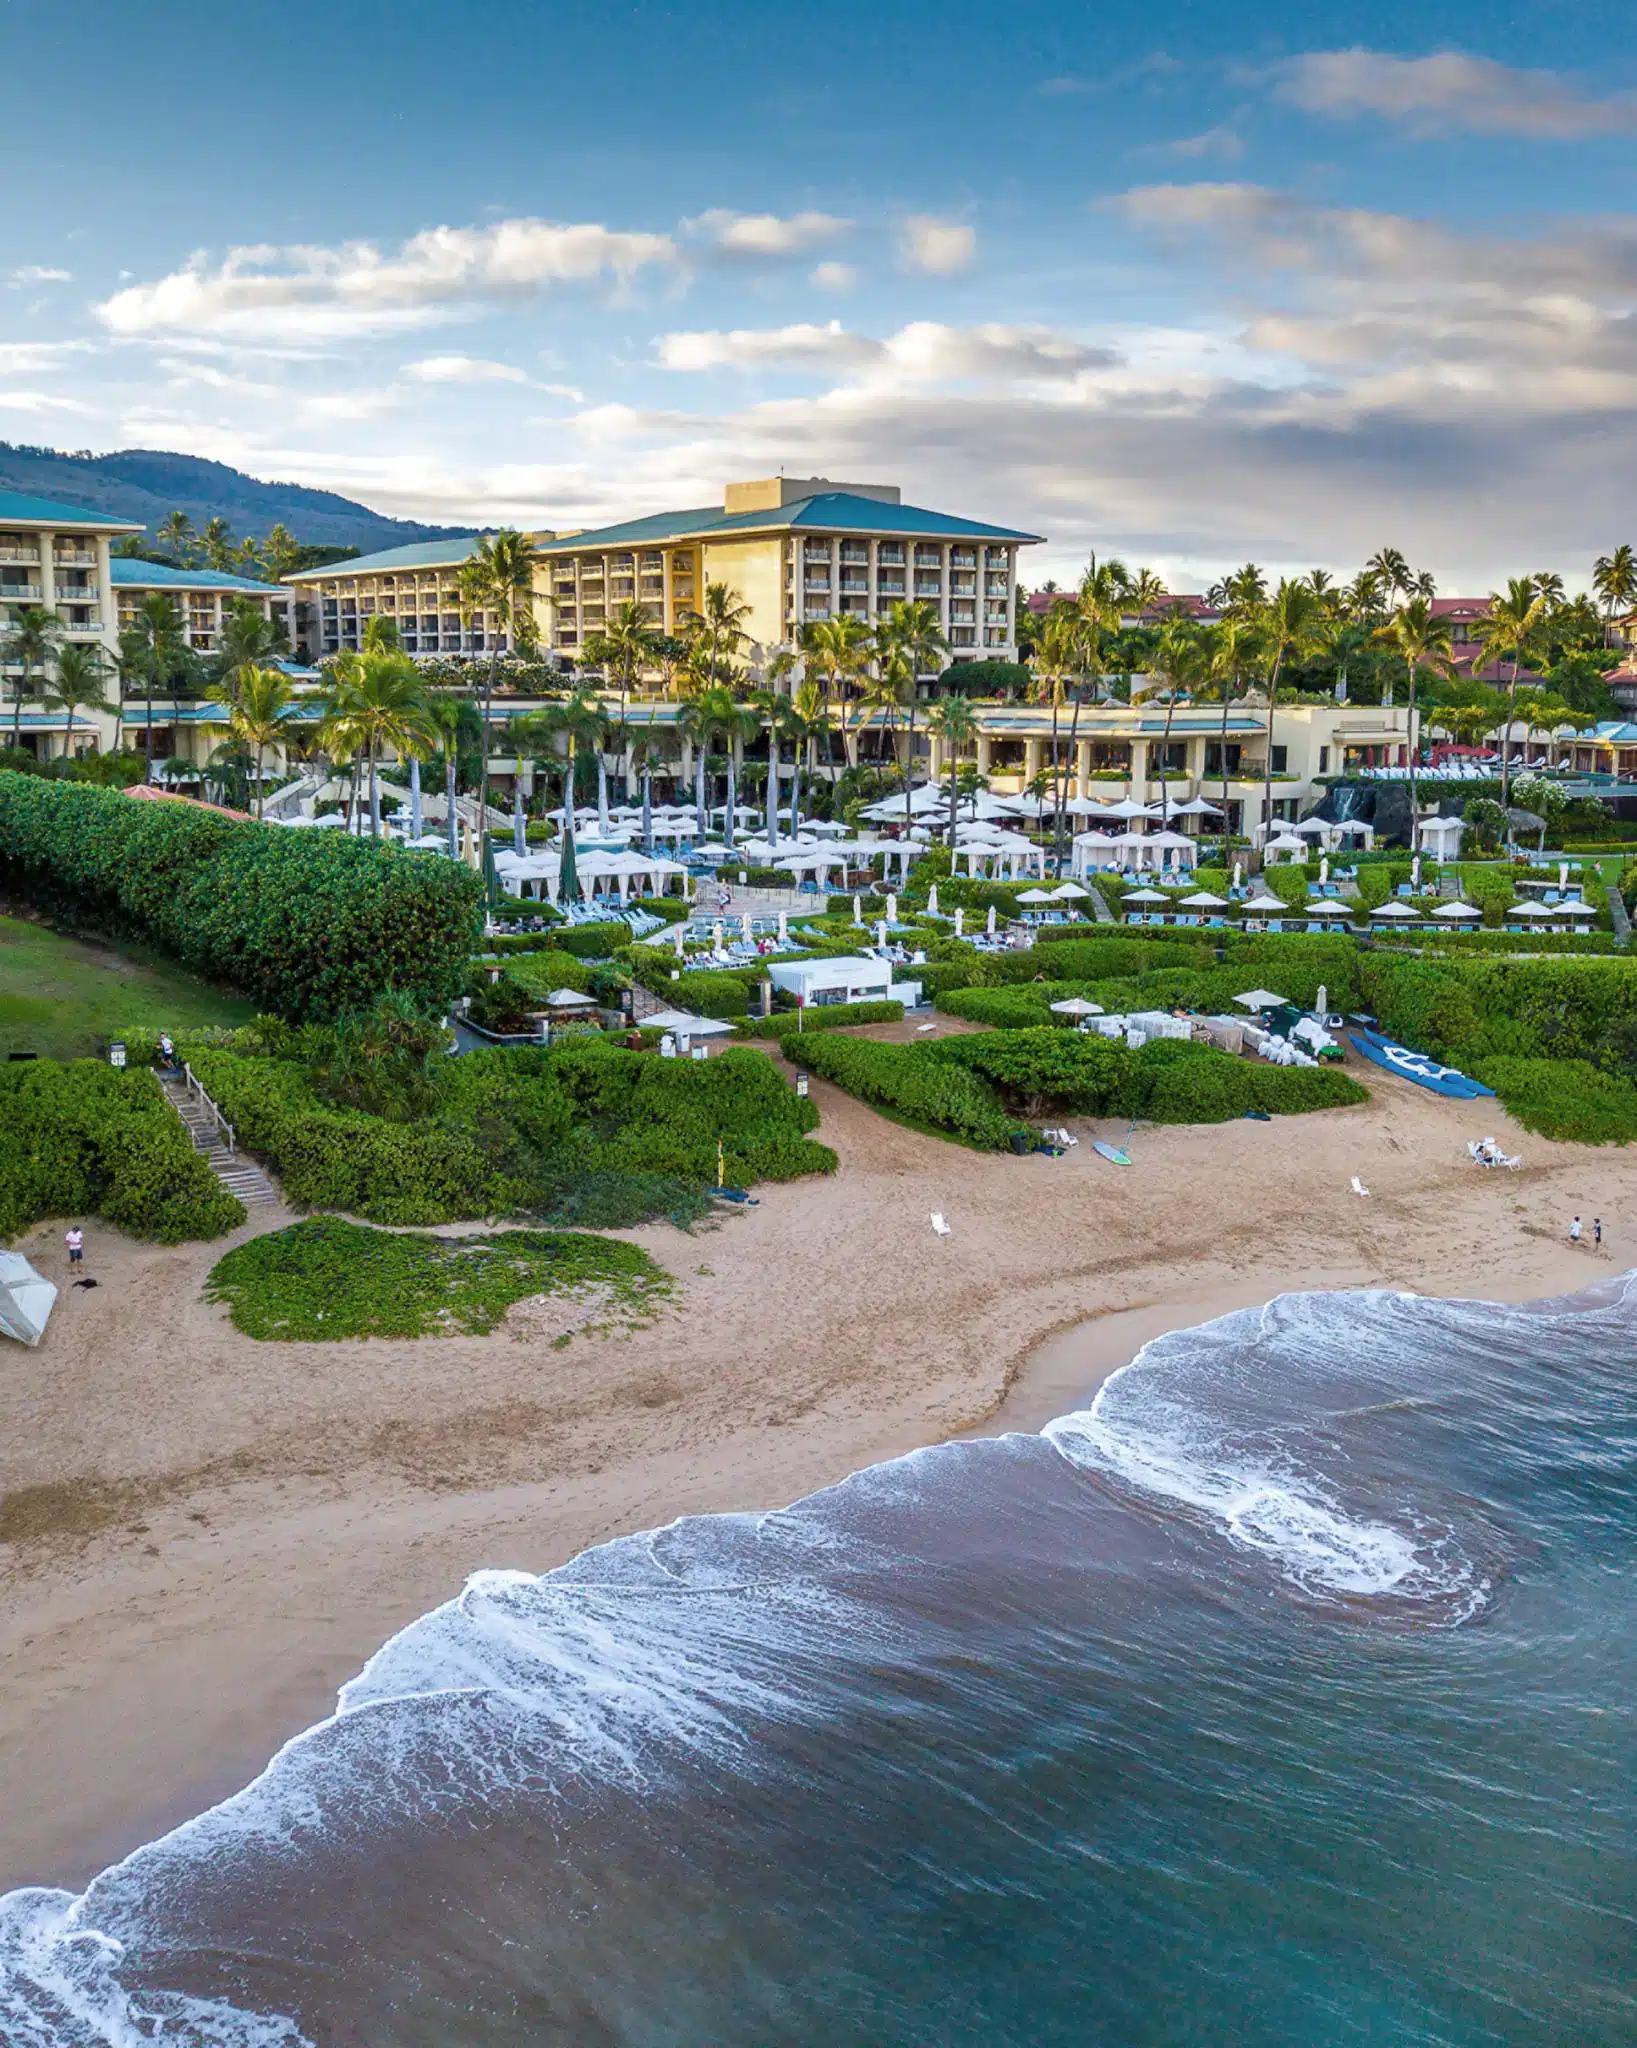 Four Seasons Resort Wailea is a Hotel located in the city of Kihei on Maui, Hawaii